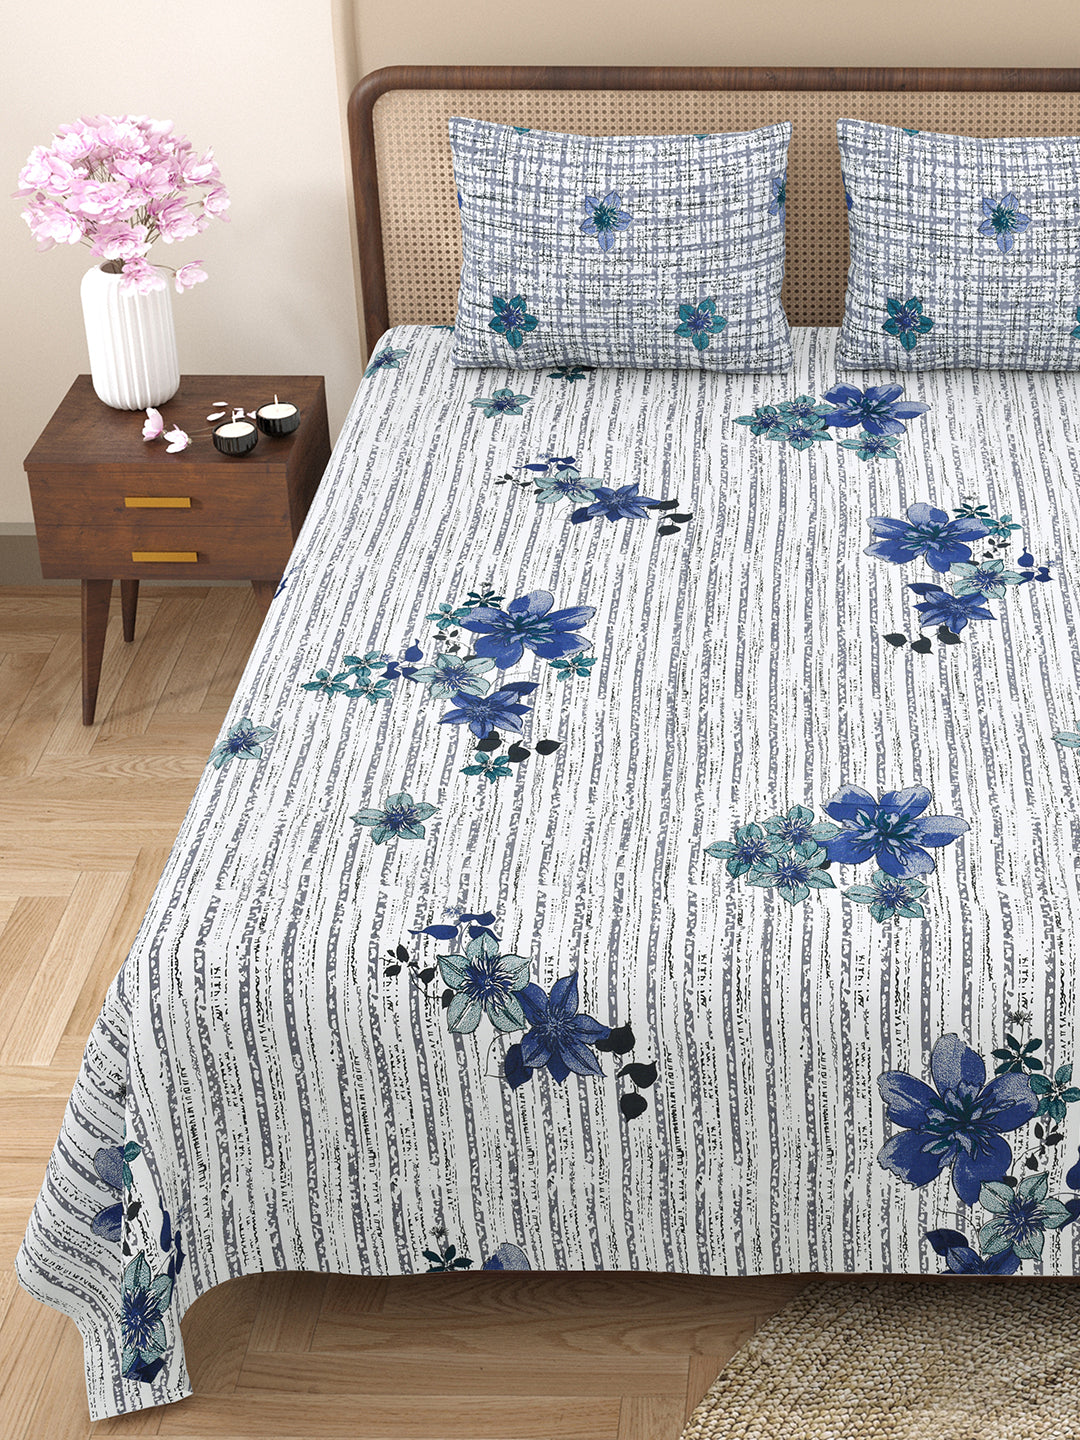 Bella Casa Fashion & Retail Ltd BEDSHEET 88 X 96 Inch / Grey / Cotton Double Bedsheet with 2 Pillow Covers Cotton Floral Design Grey Colour - Element Collection